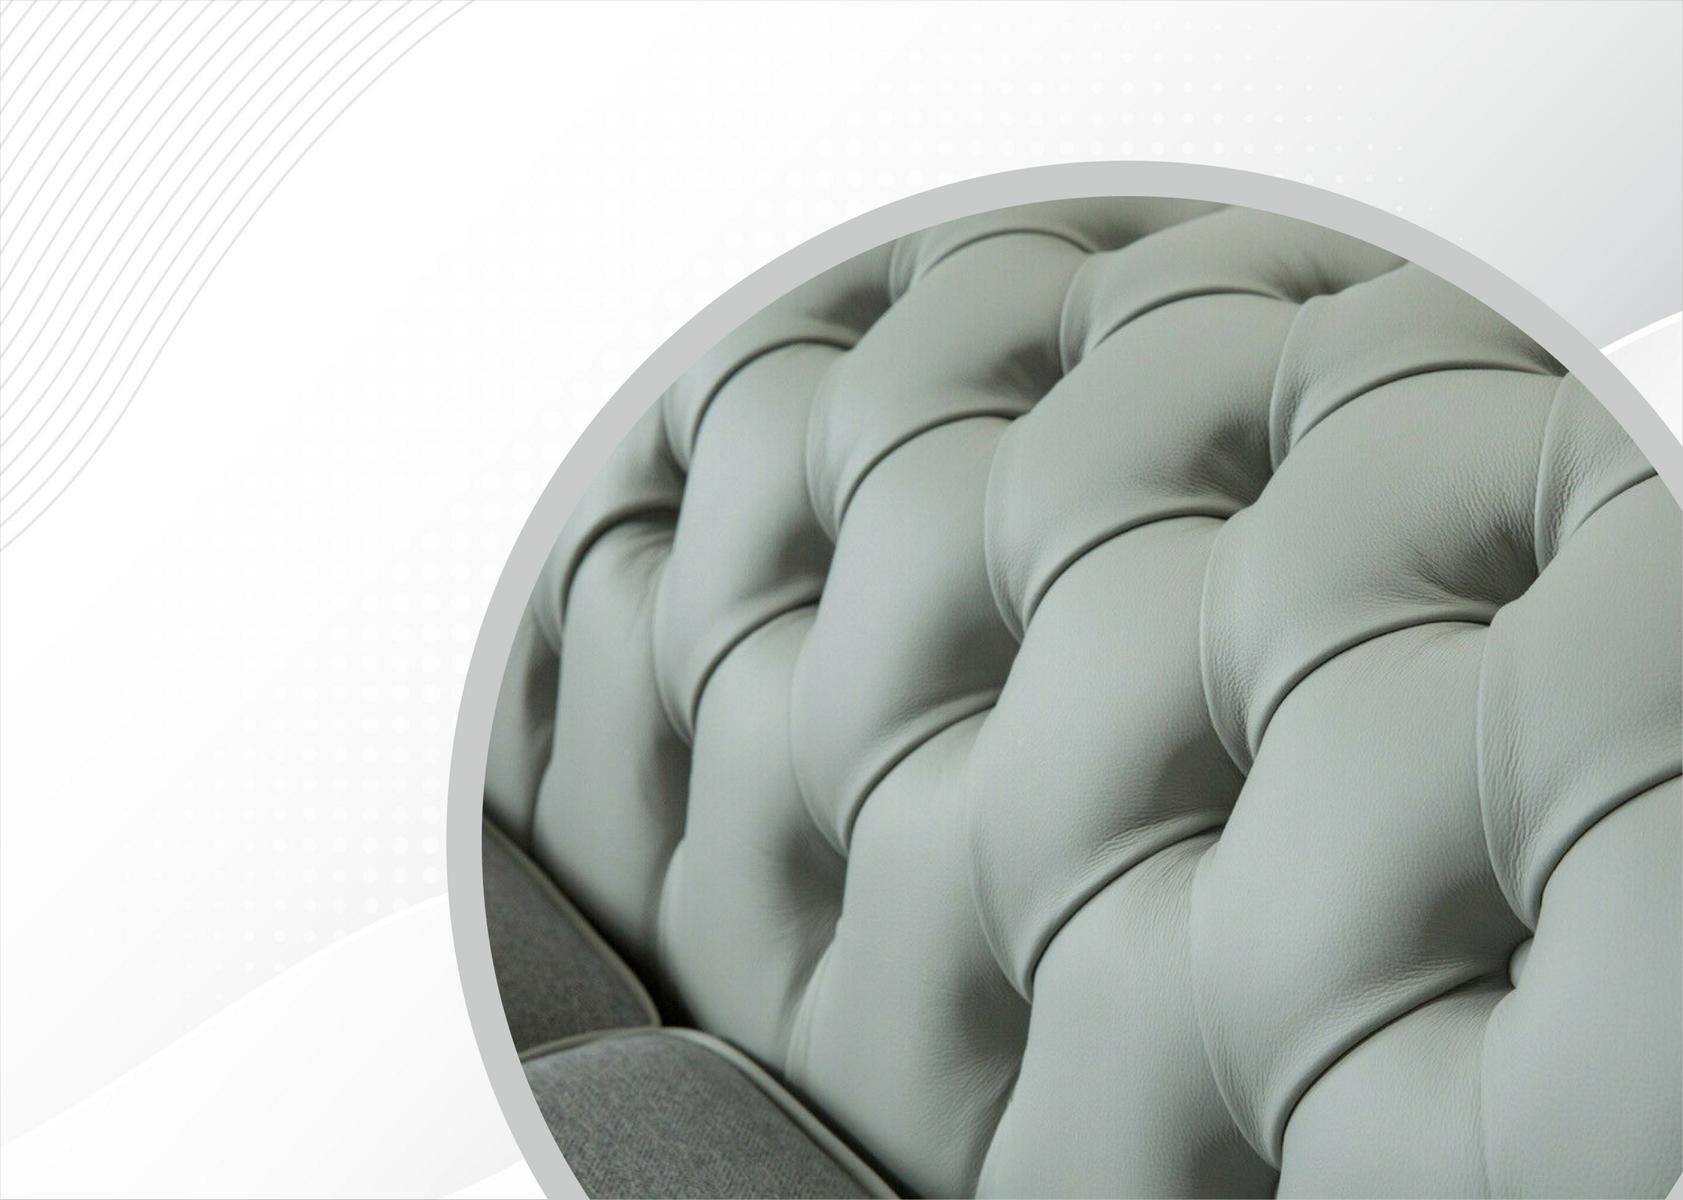 225 3 Chesterfield-Sofa, Chesterfield Couch Sofa cm Sitzer JVmoebel Design